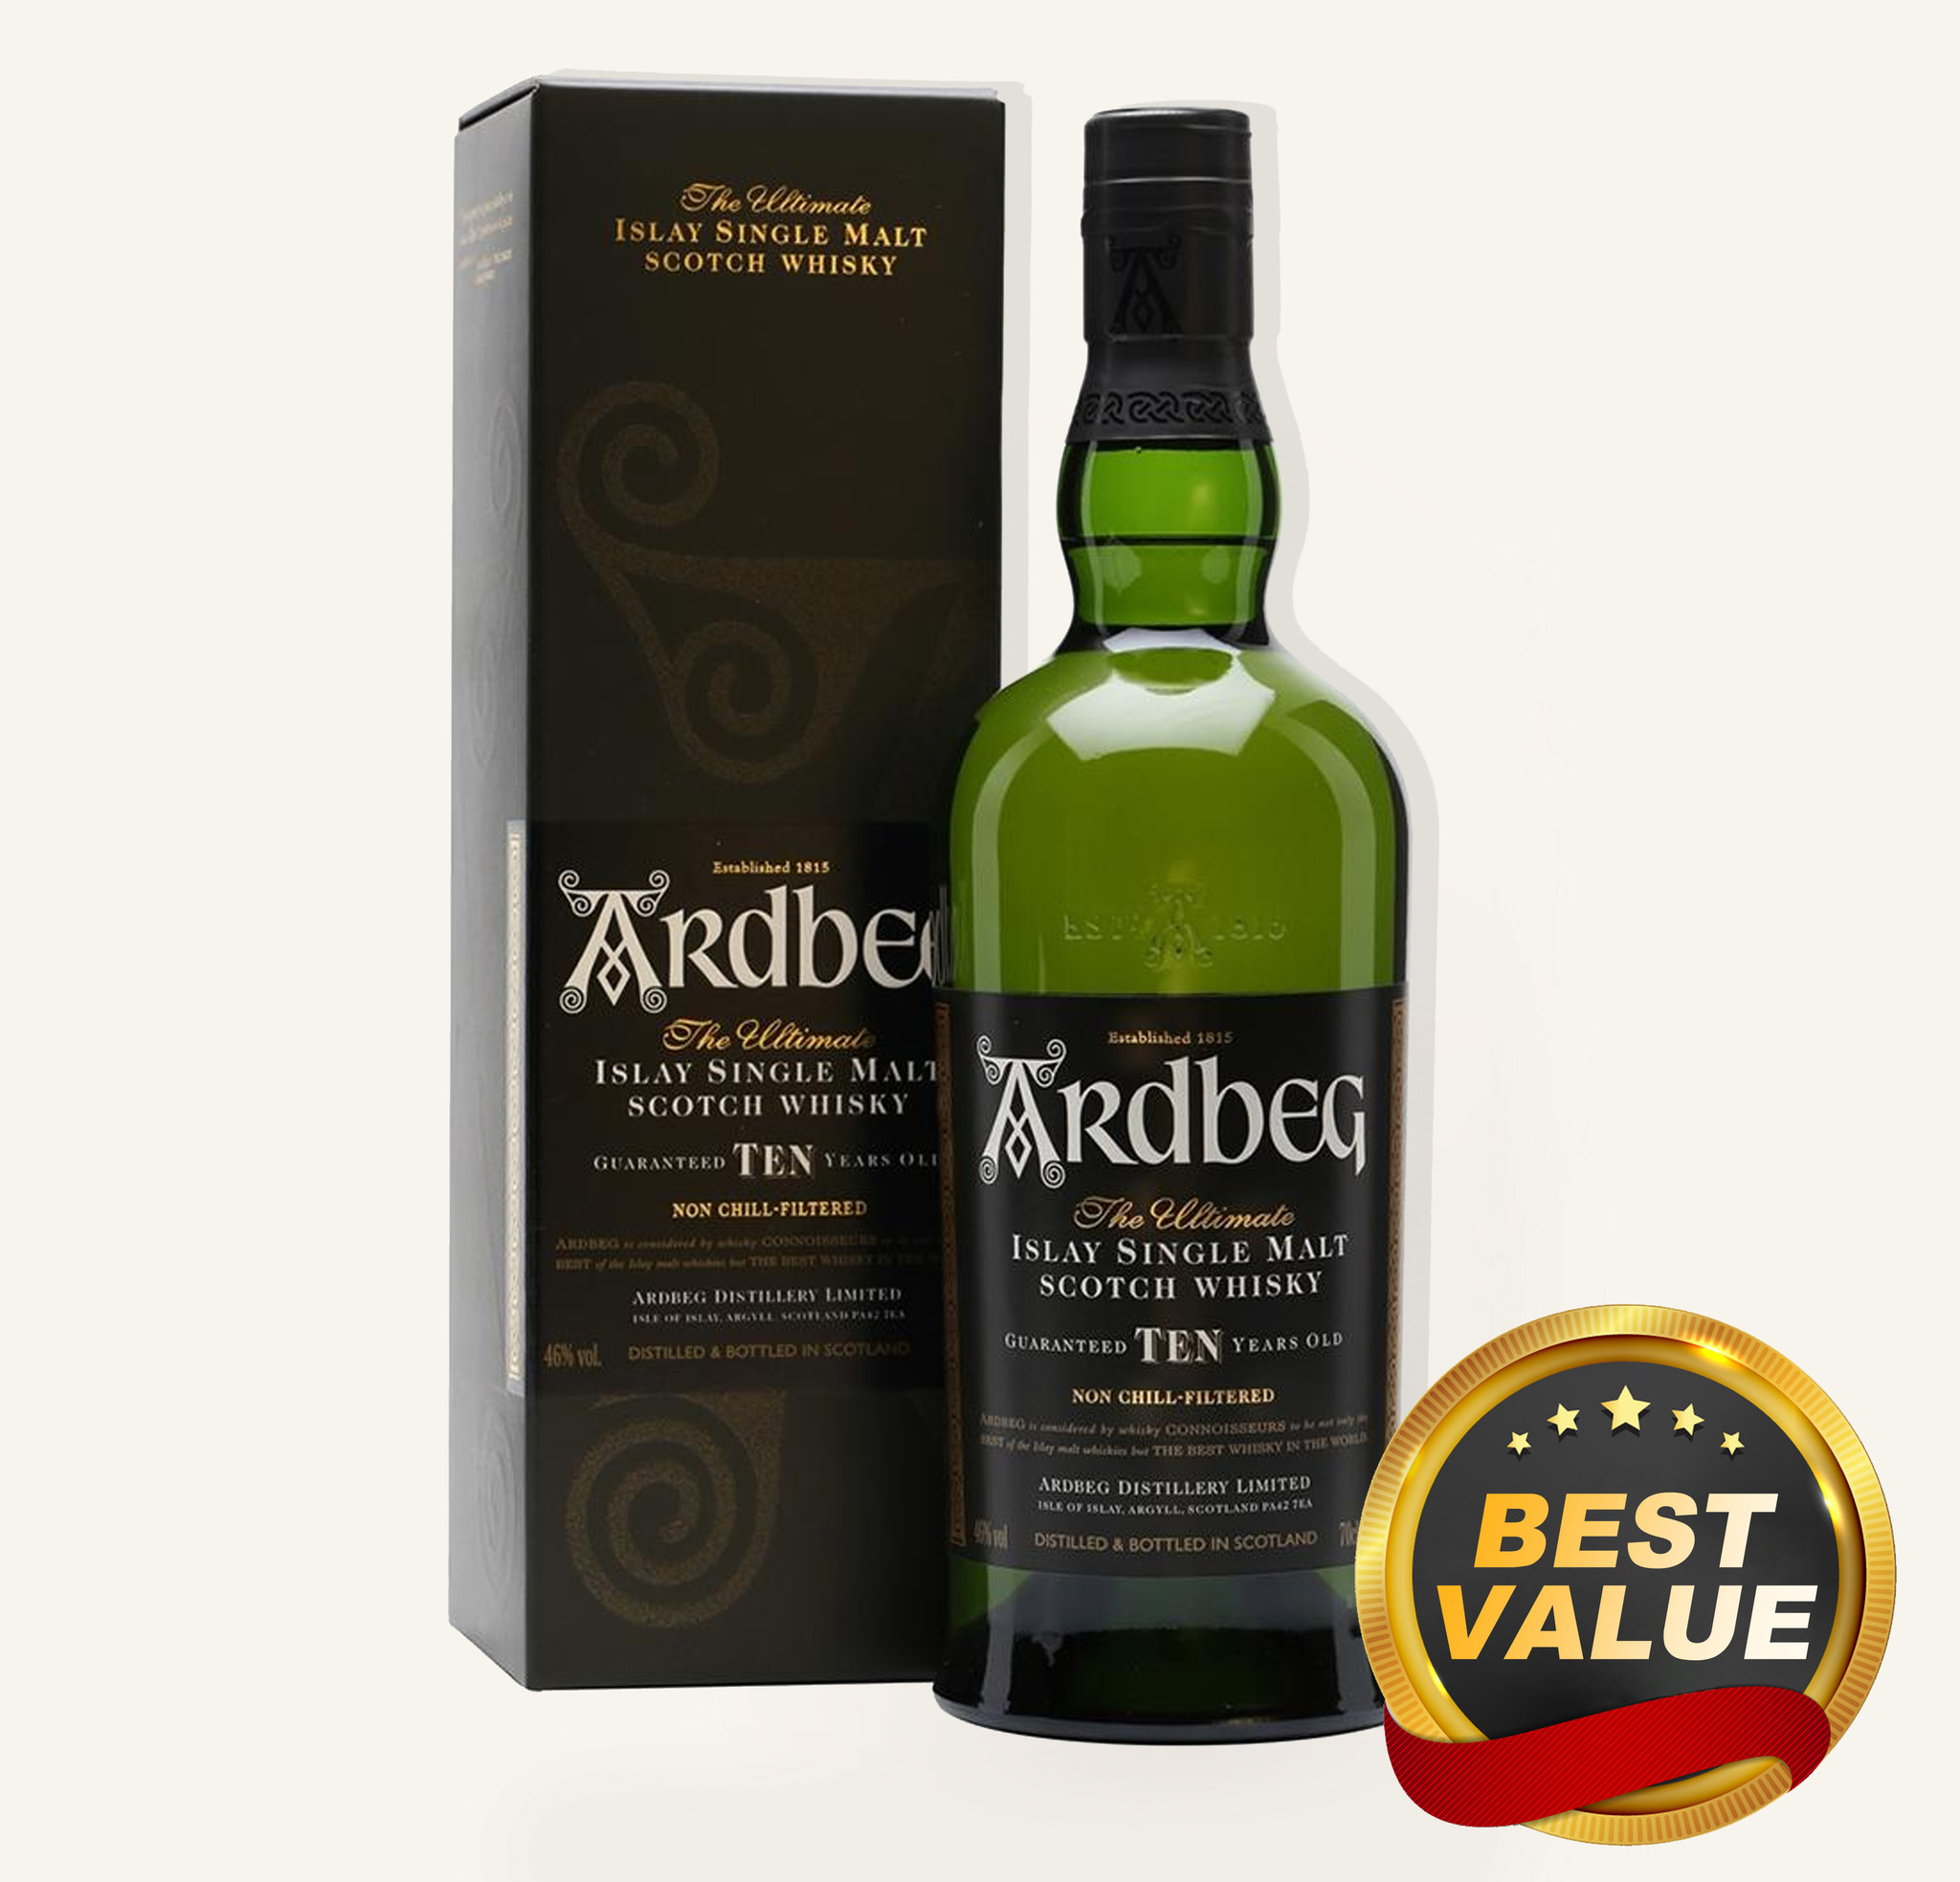 Uigeadail Single Malt Scotch Whisky, Ardbeg, Islay (Gift Boxed